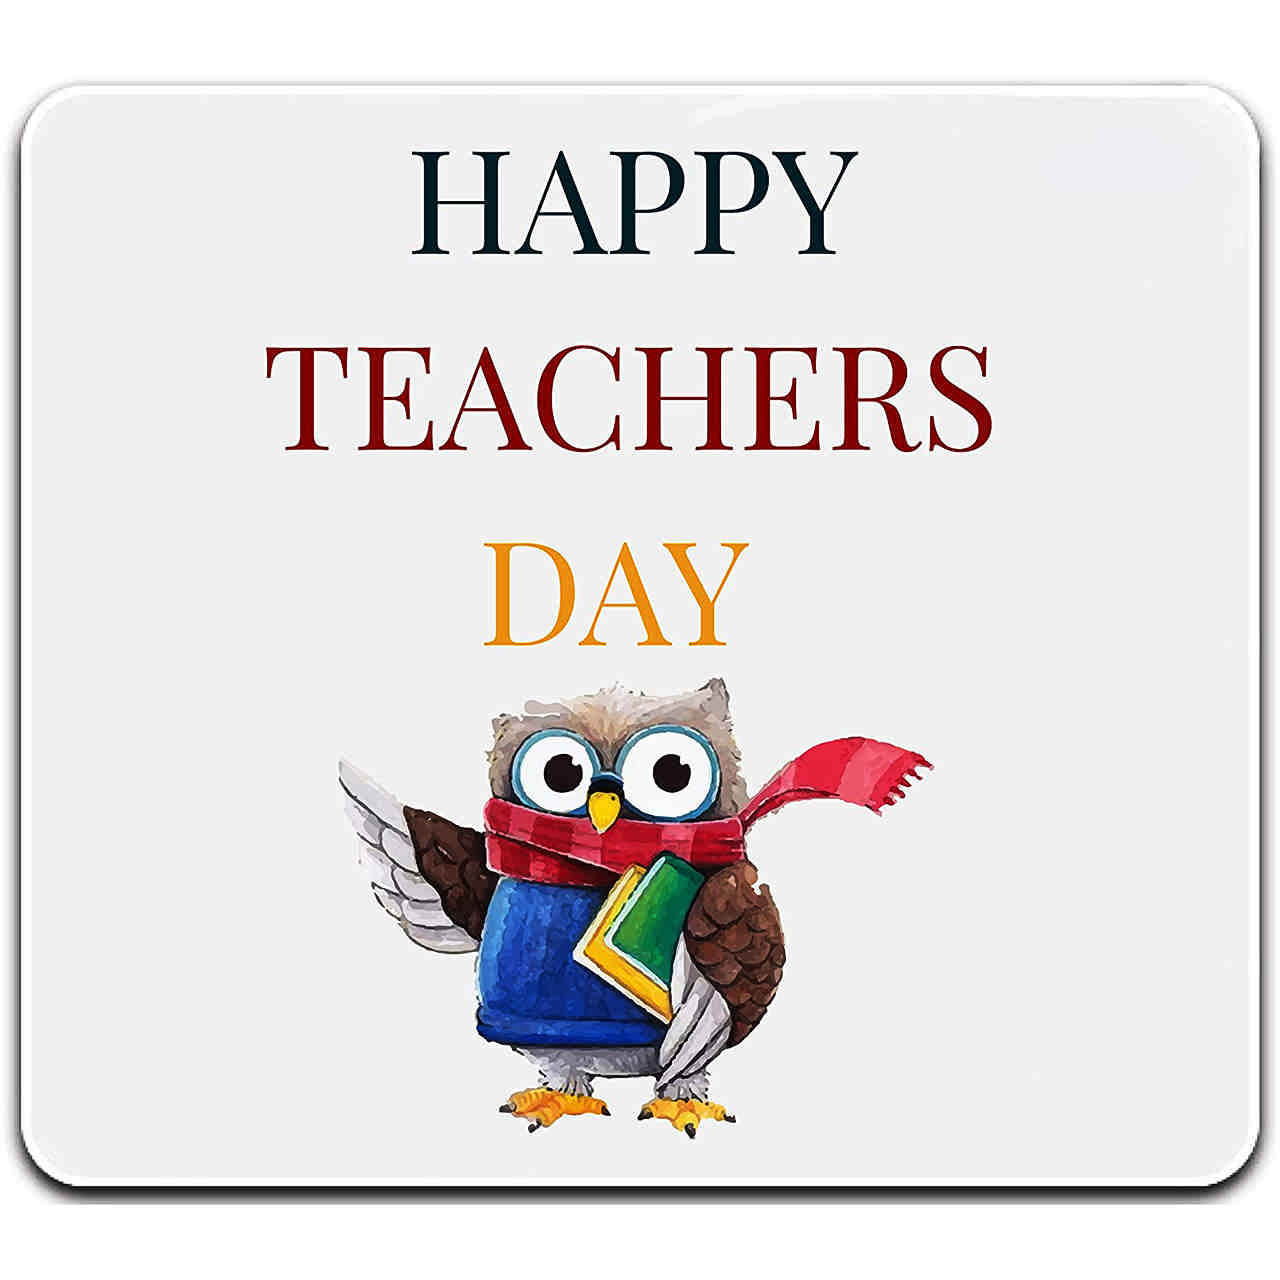 HAPPY TEACHERS DAY MOUSE PAD (Design 9)